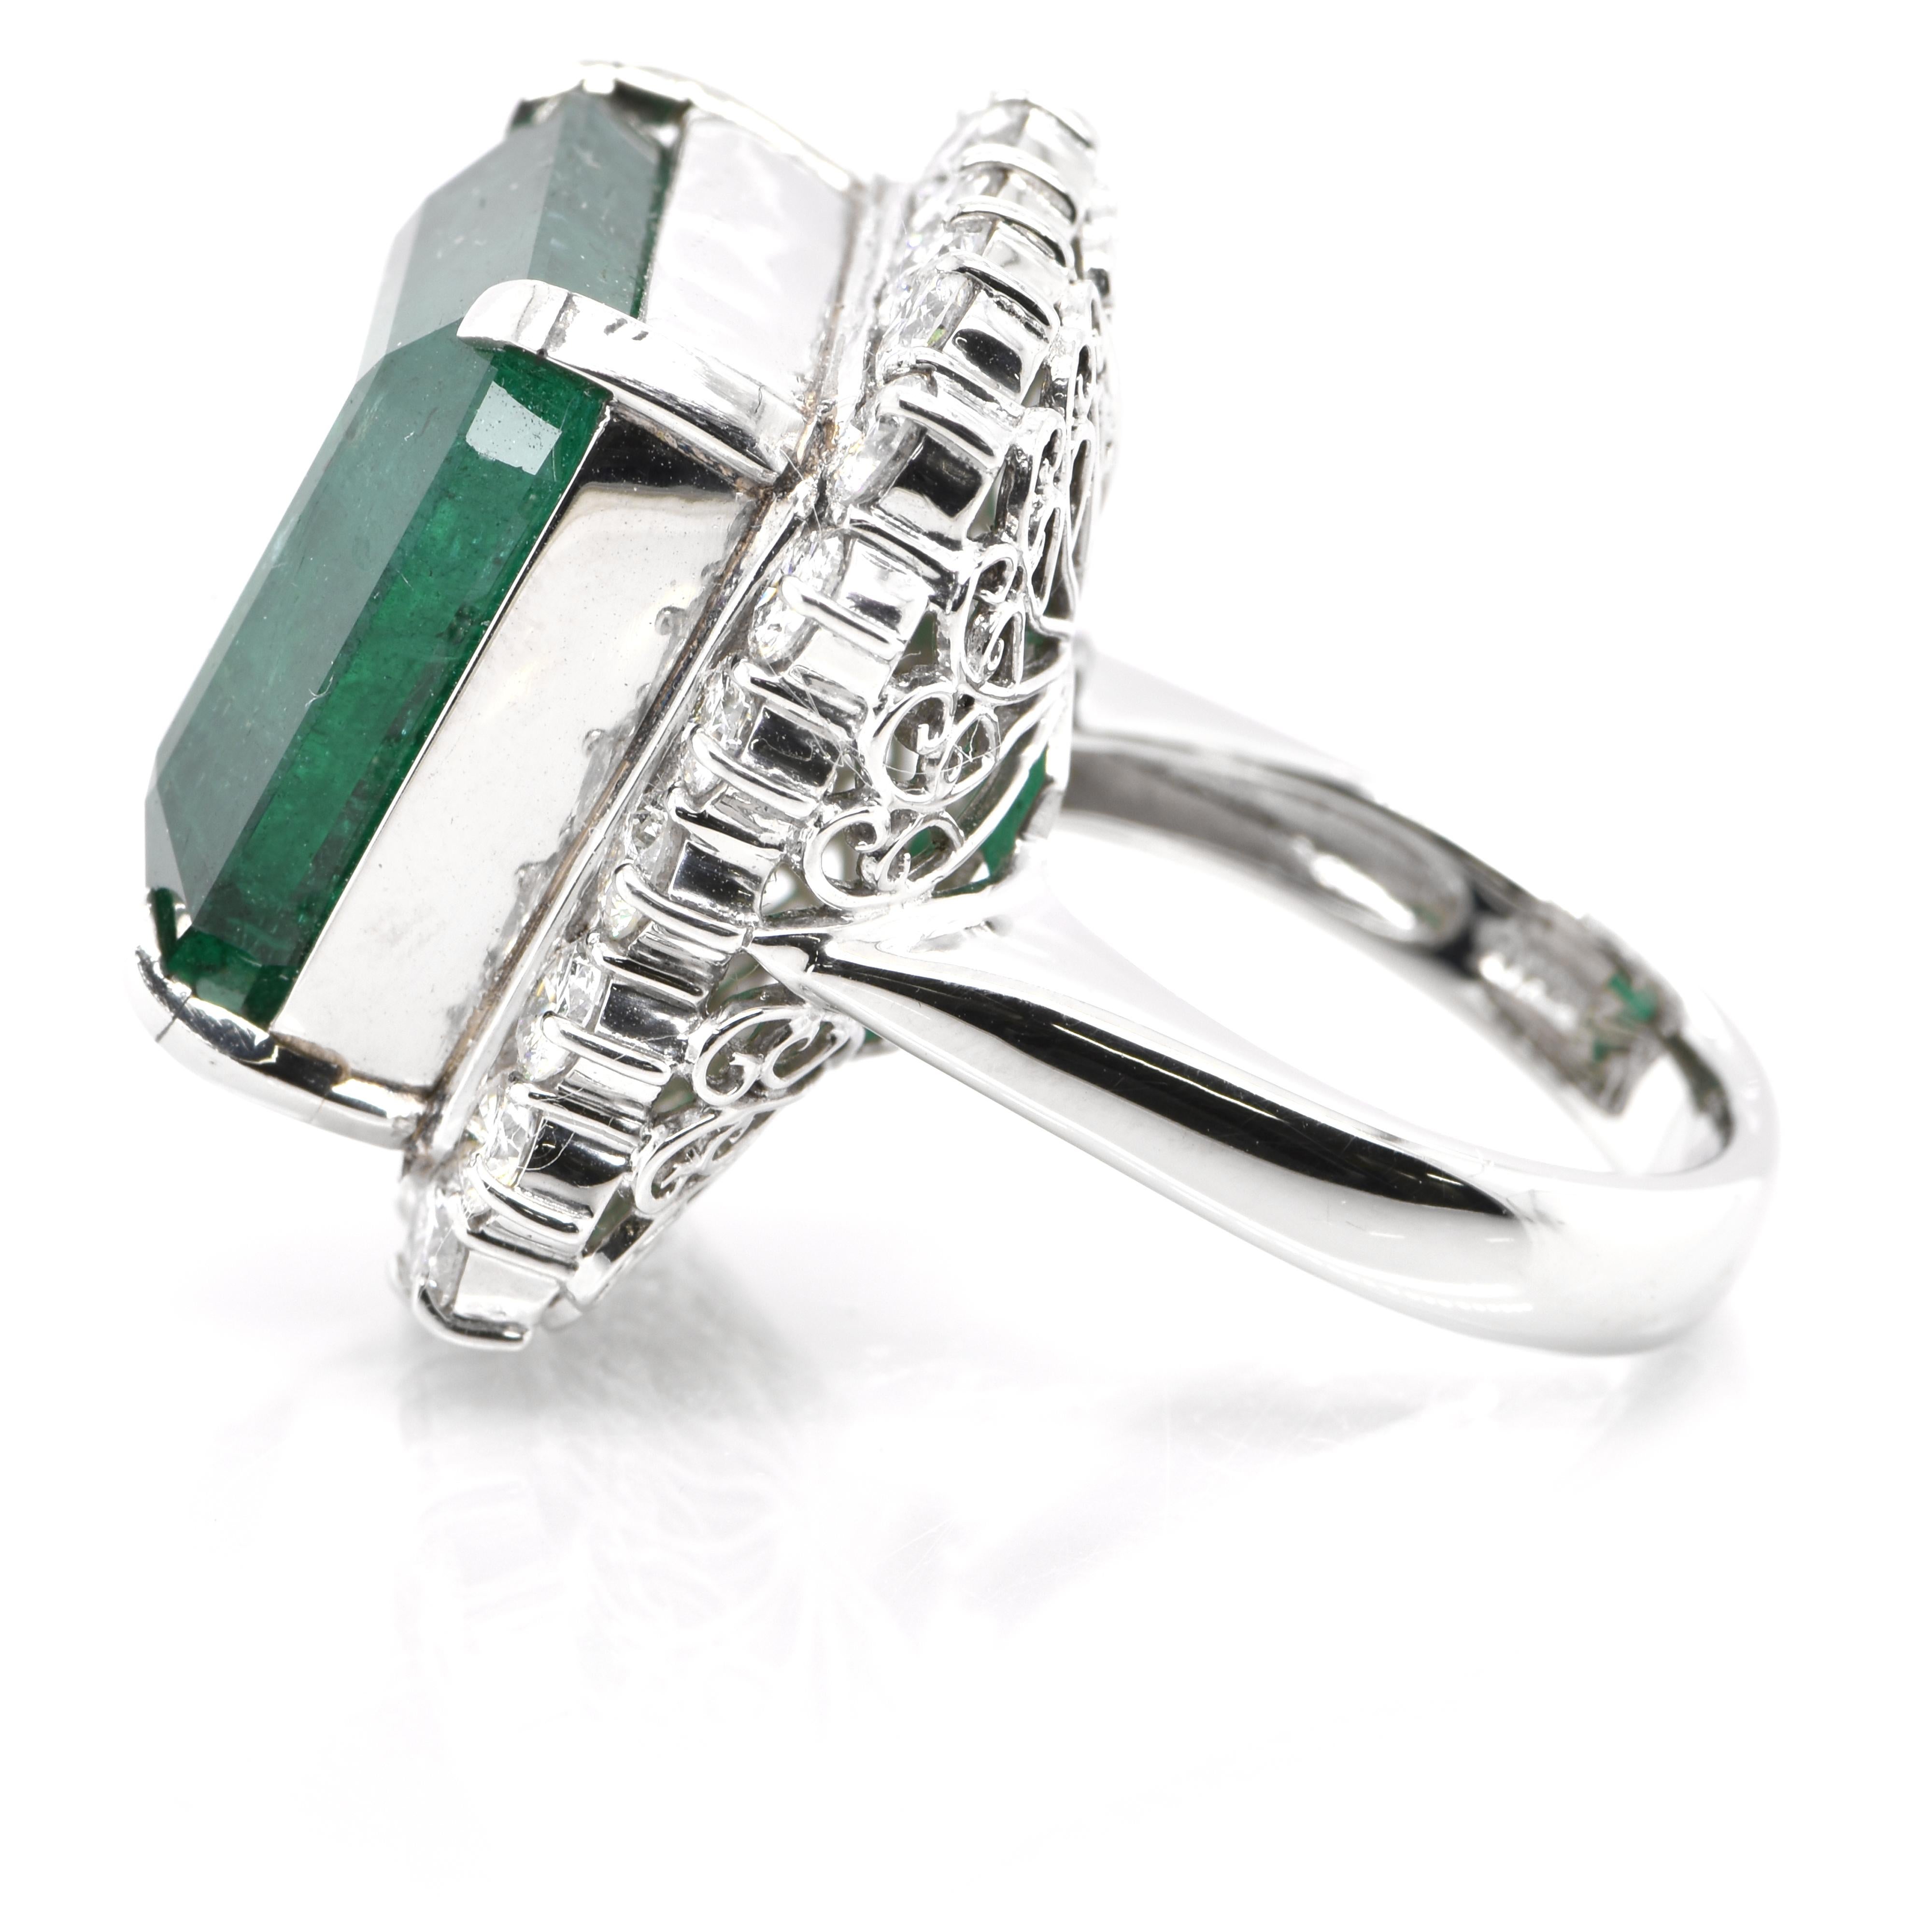 Emerald Cut 29.29 Carat Natural Emerald and Diamond Cocktail Ring Set in Platinum